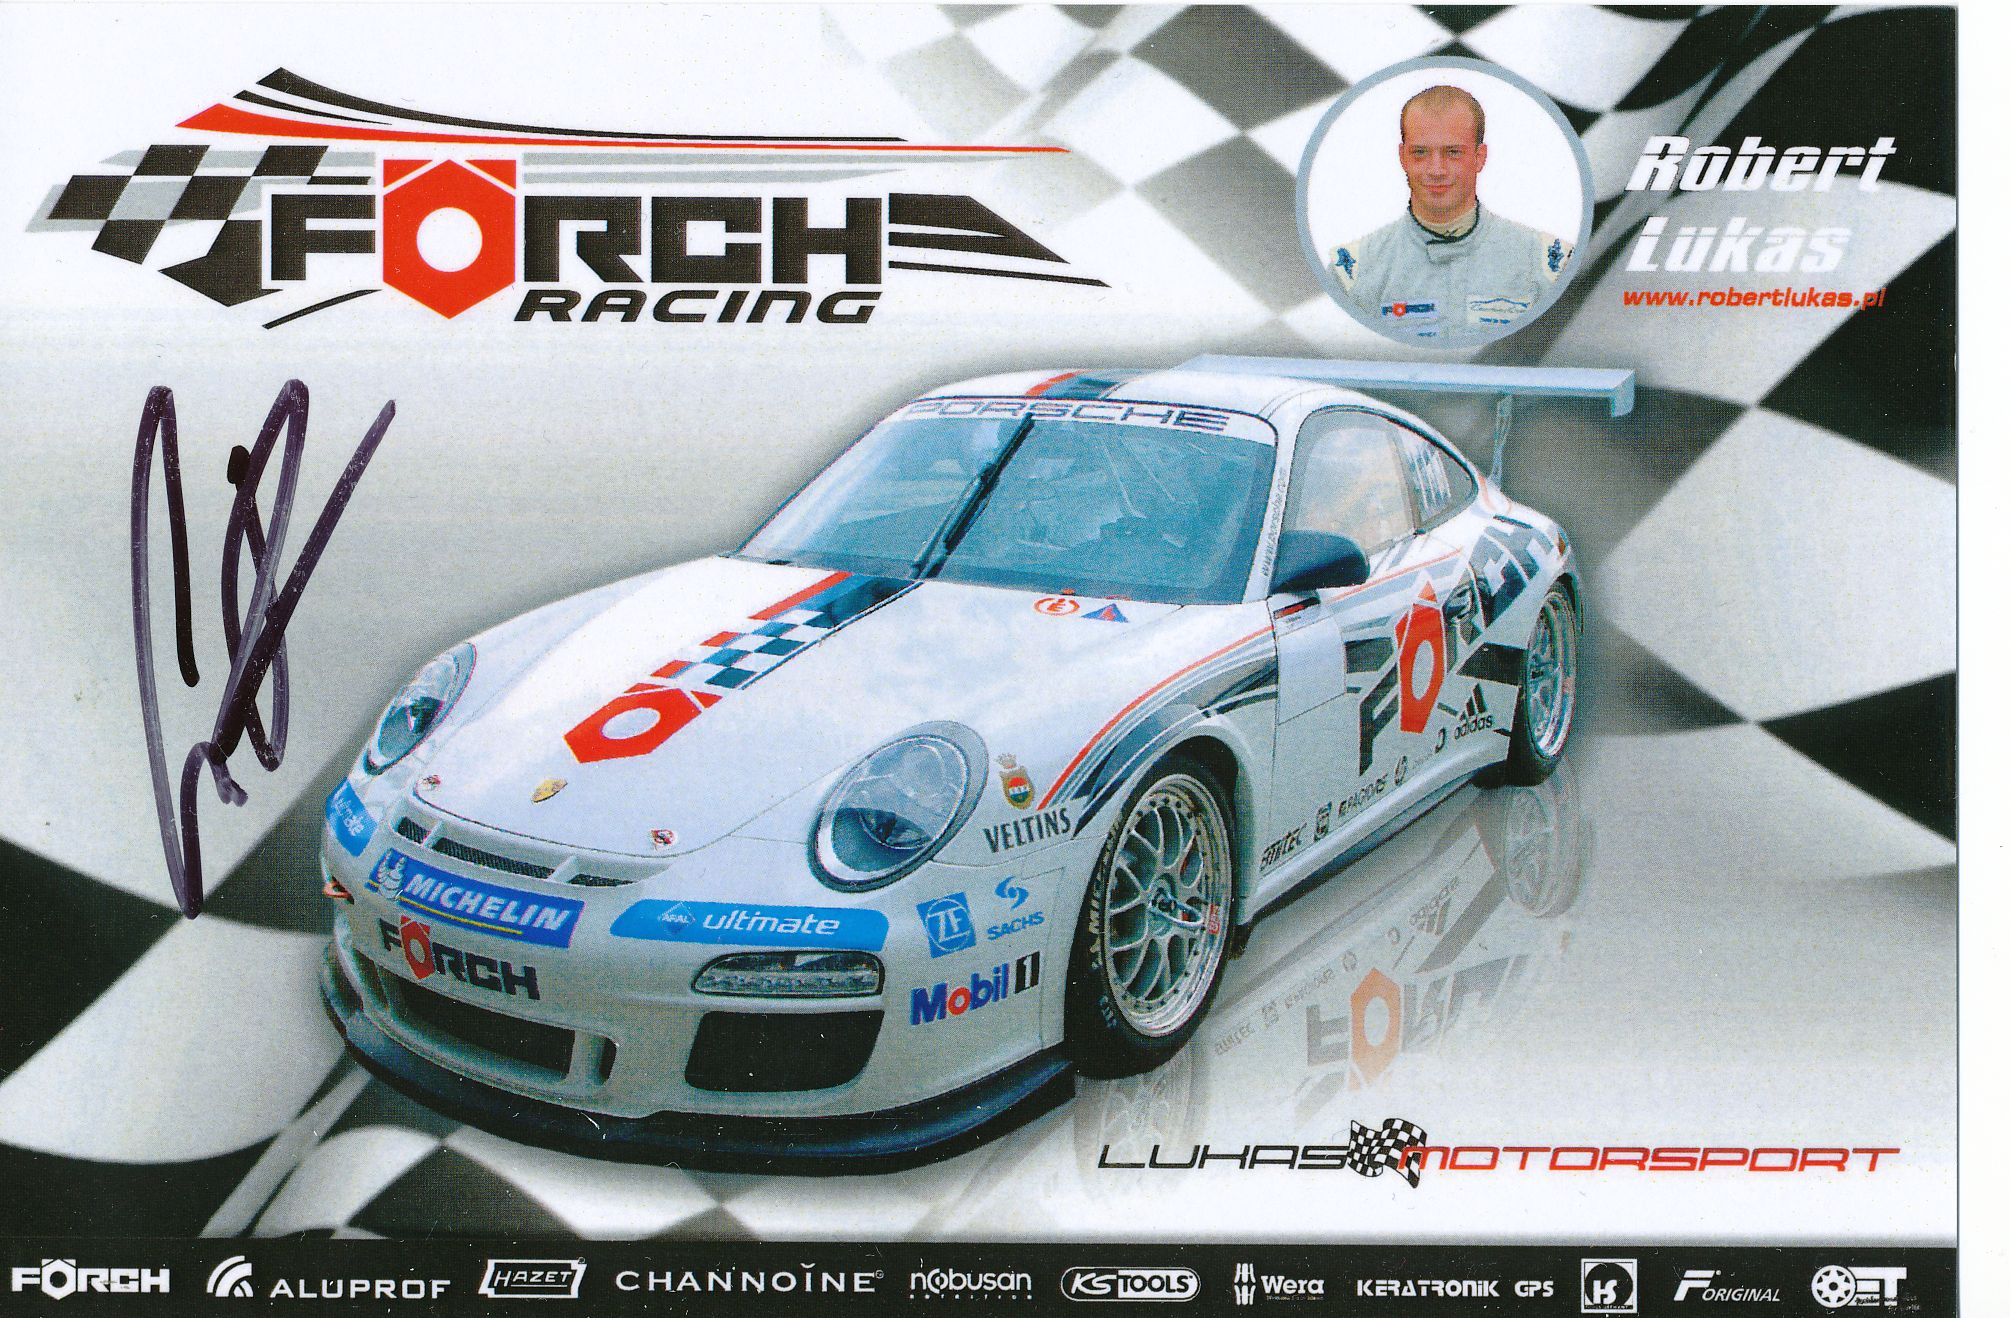 62682 Robert Lukas Motorsport original signierte Autogrammkarte Übergröße